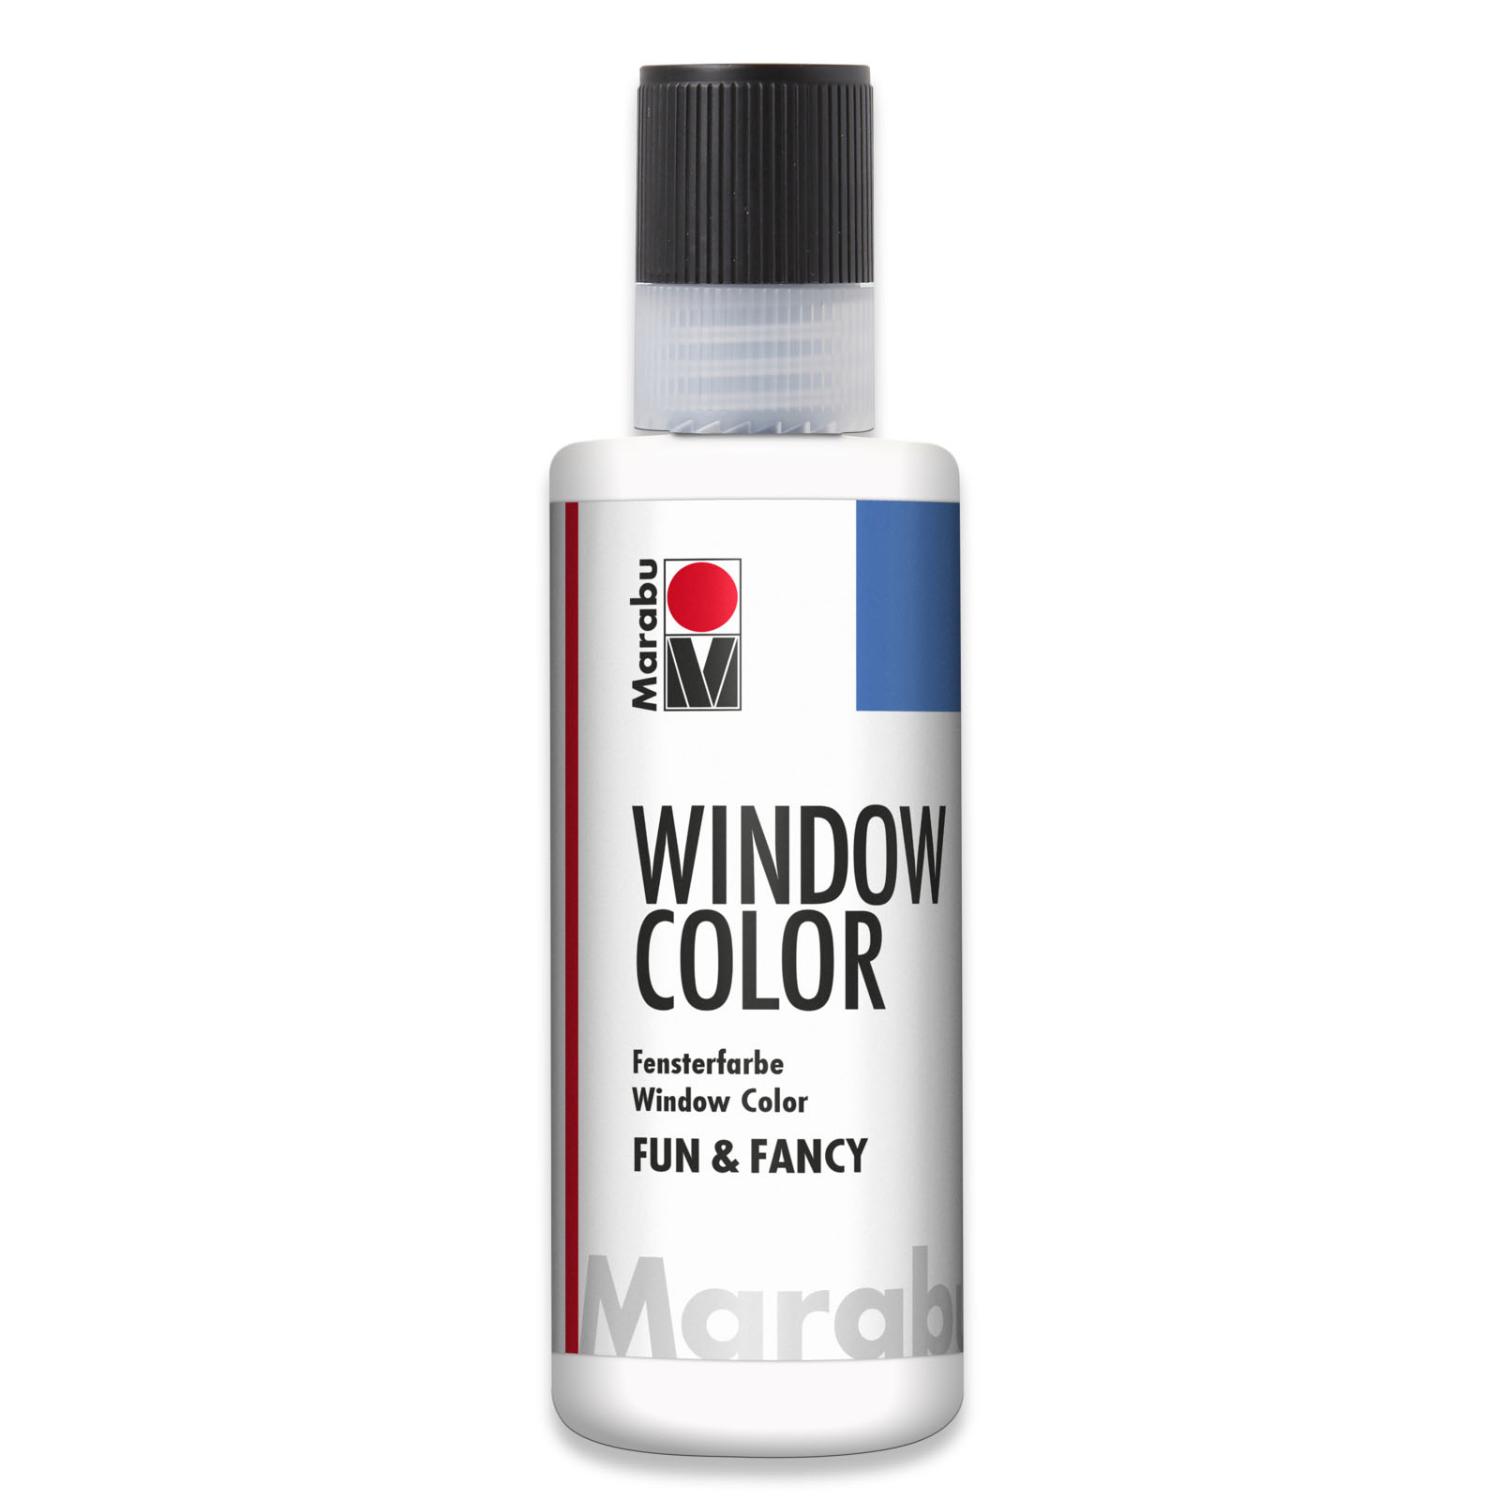 Marabu Window Color fun & fancy, 80 ml, kristallklar